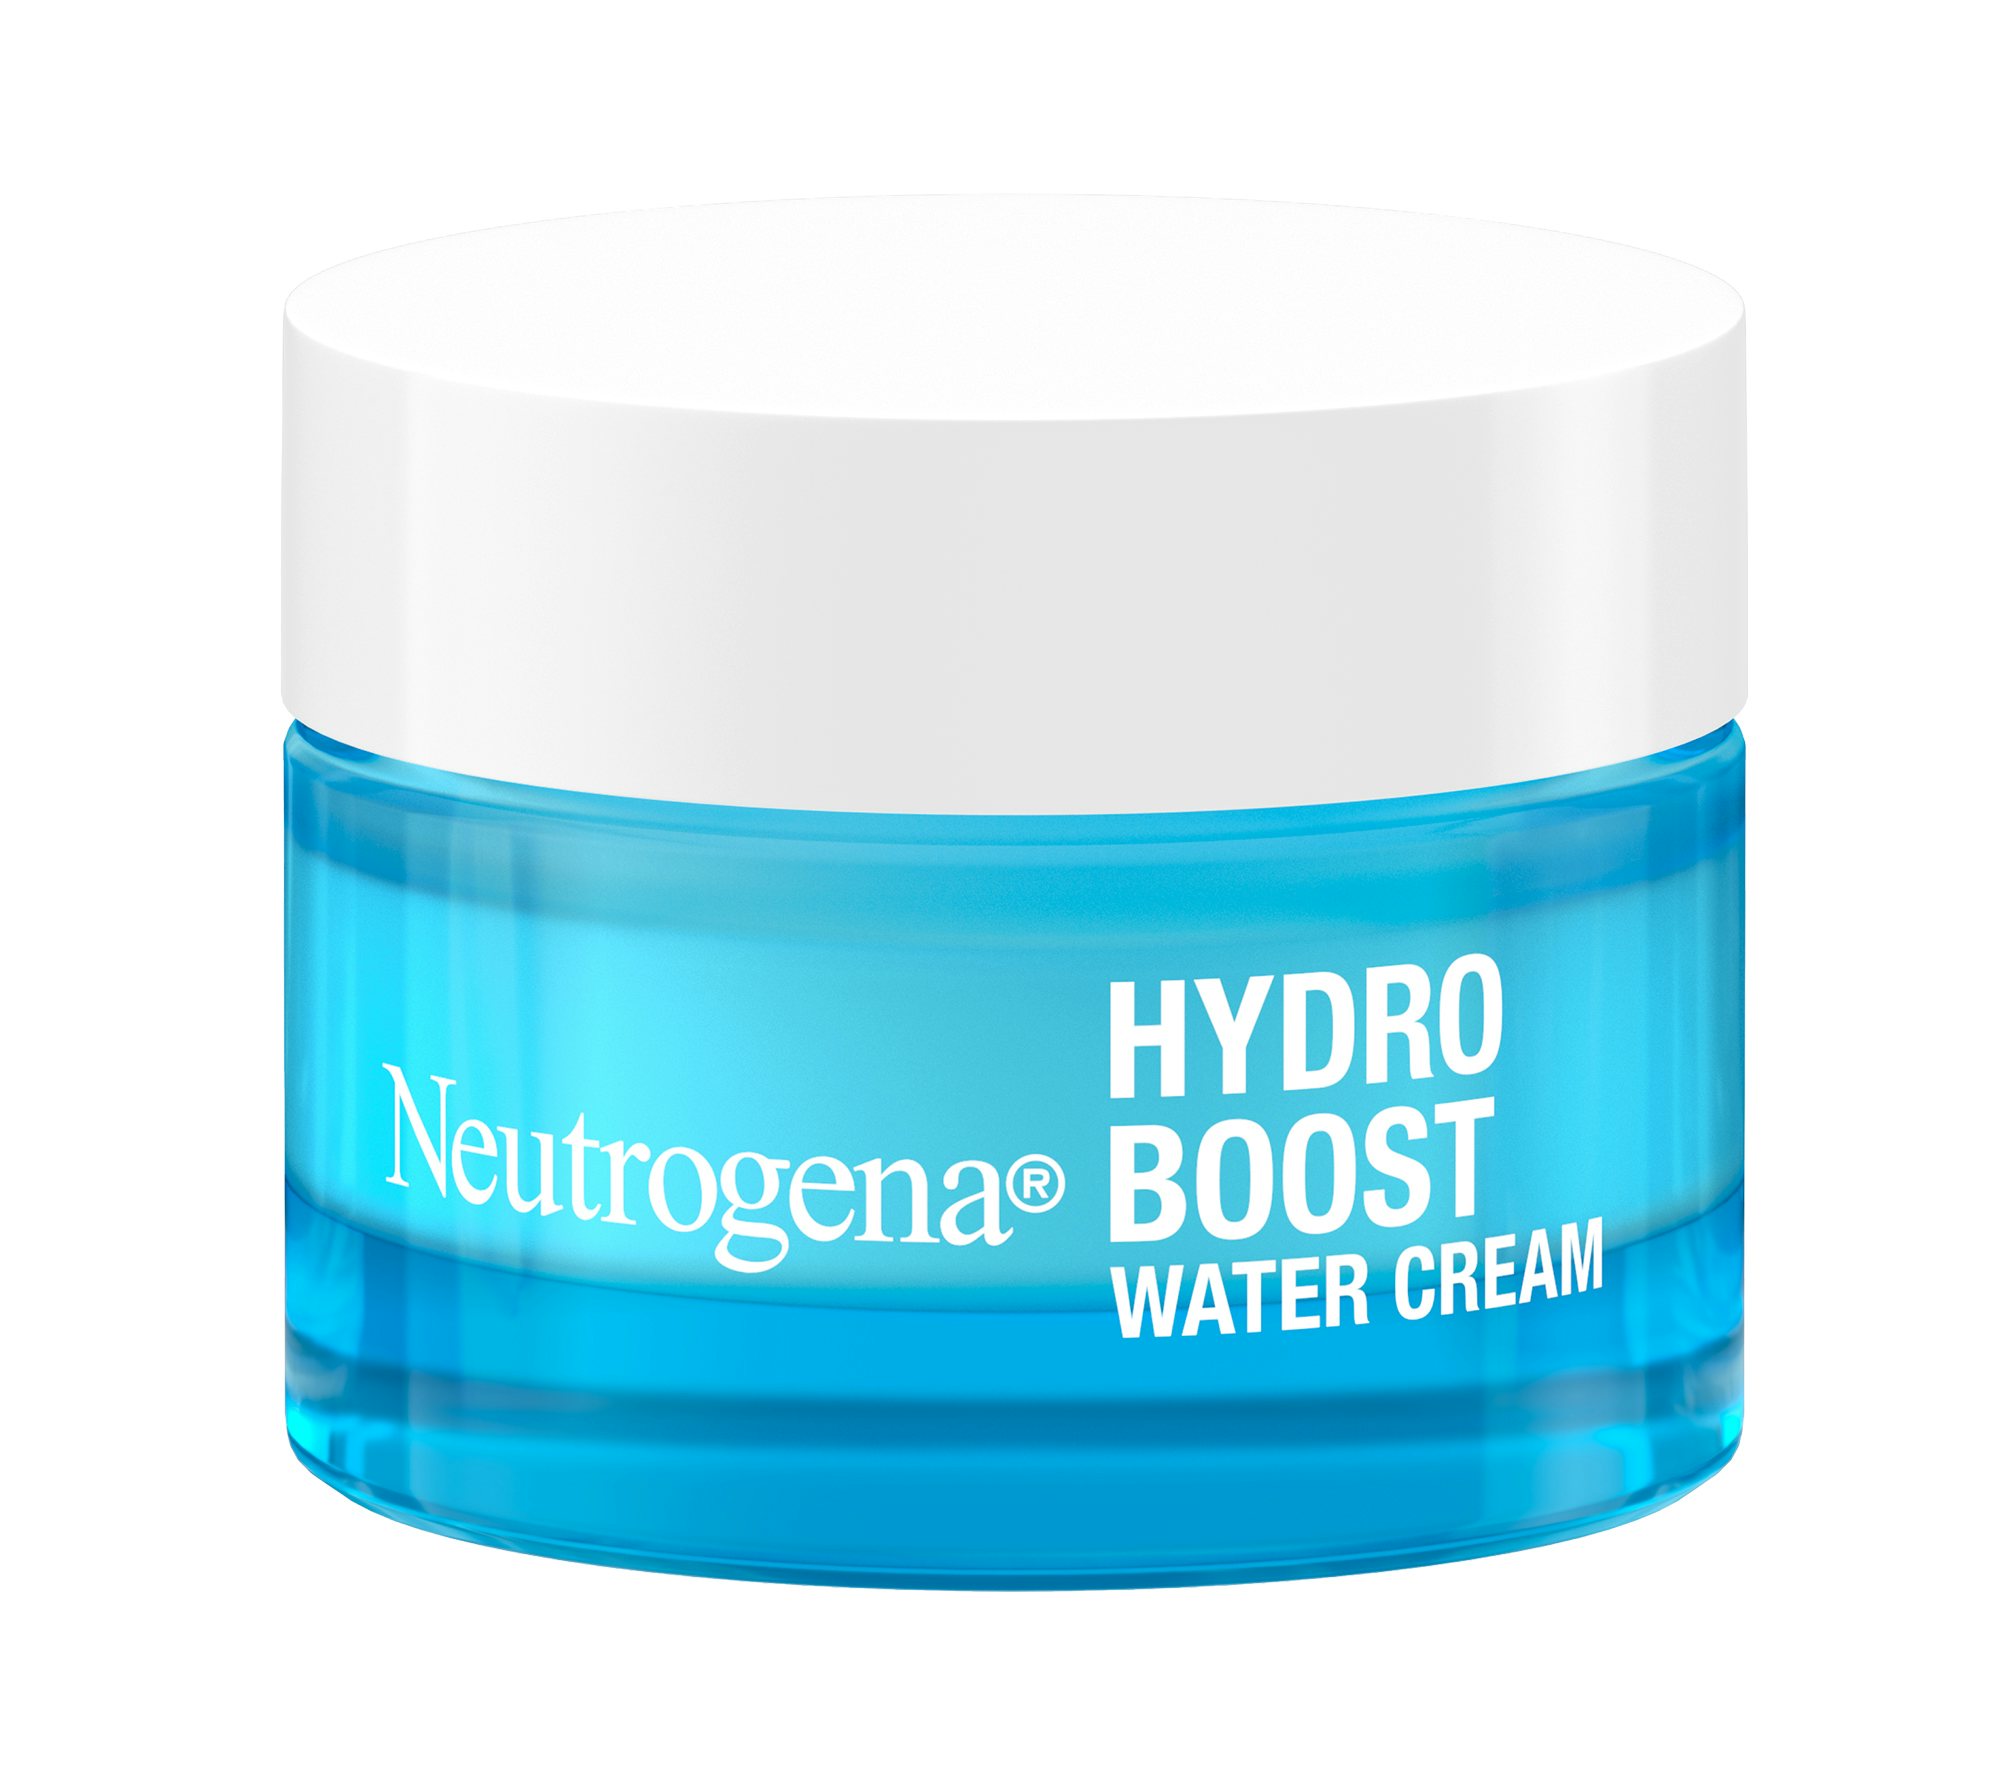 Neutrogena Hydro Boost Water Cream